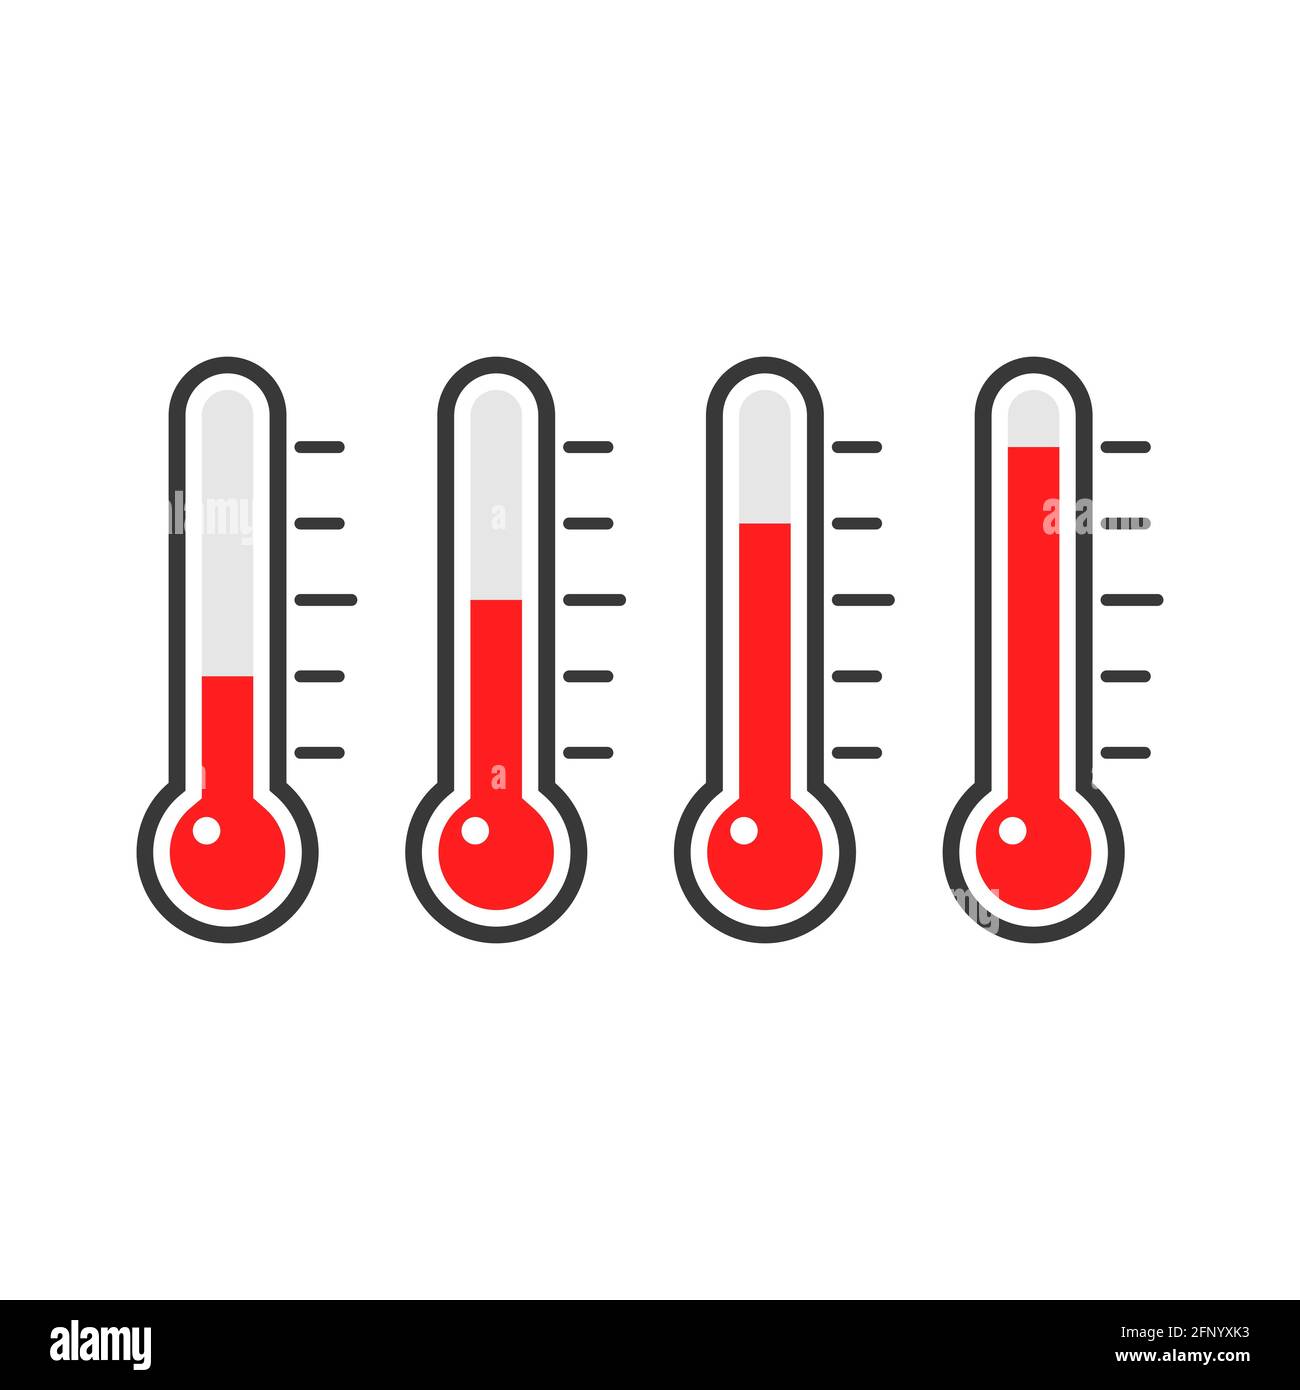 High temperature, temperature, thermometer, weather icon